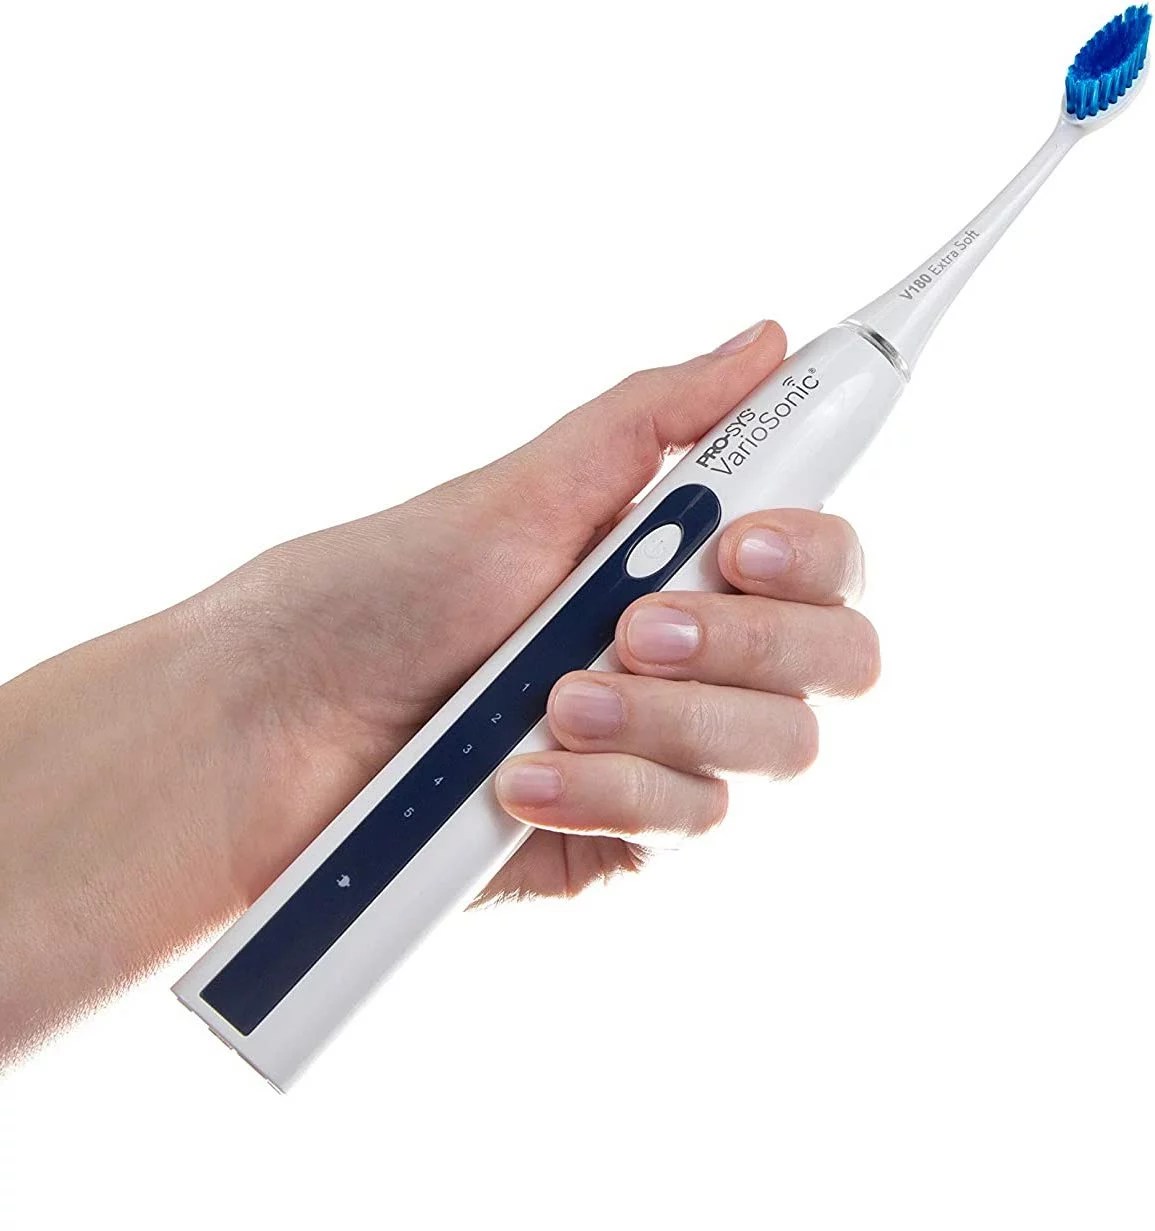 Pro-Sys Variosonic Electric Toothbrush